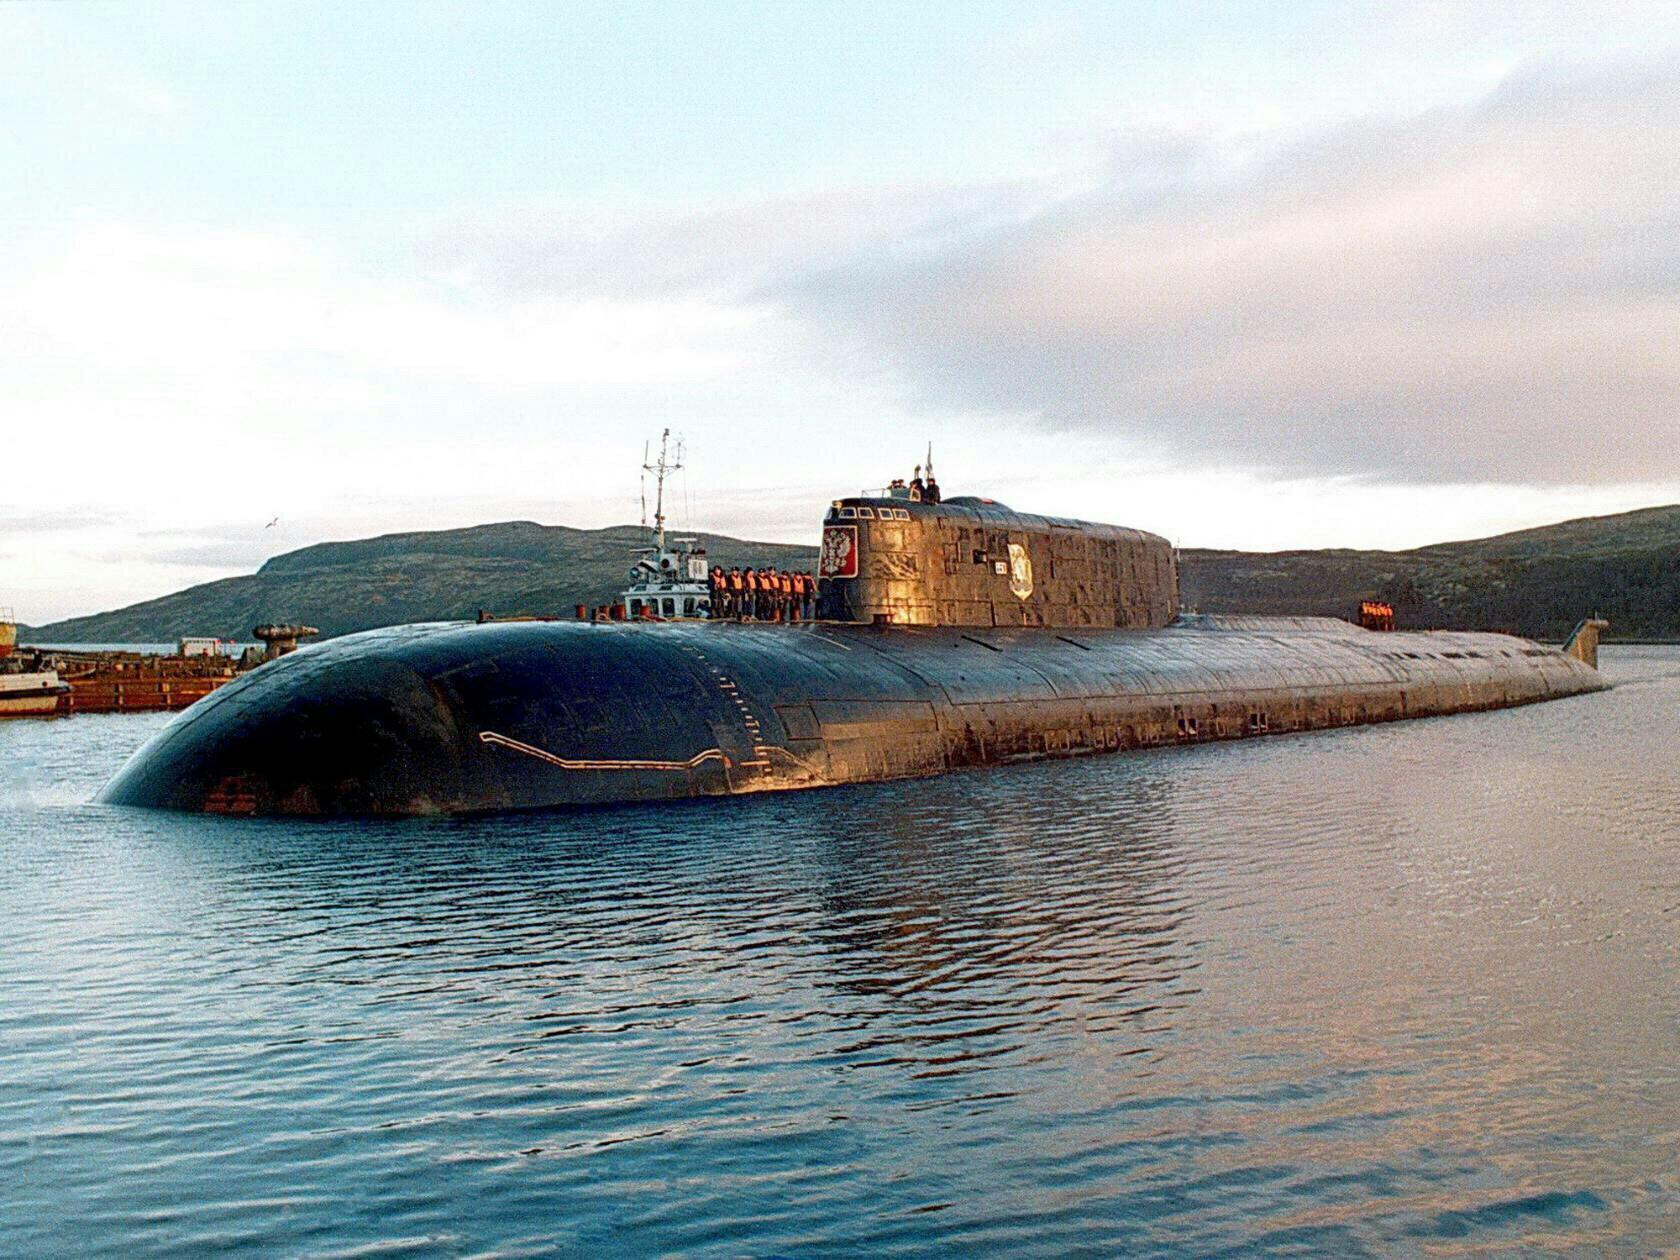 Пл пр т. Лодка к-141 «Курск». АПЛ К 141. К-141 подводная лодка. Атомная подводная лодка Курск.